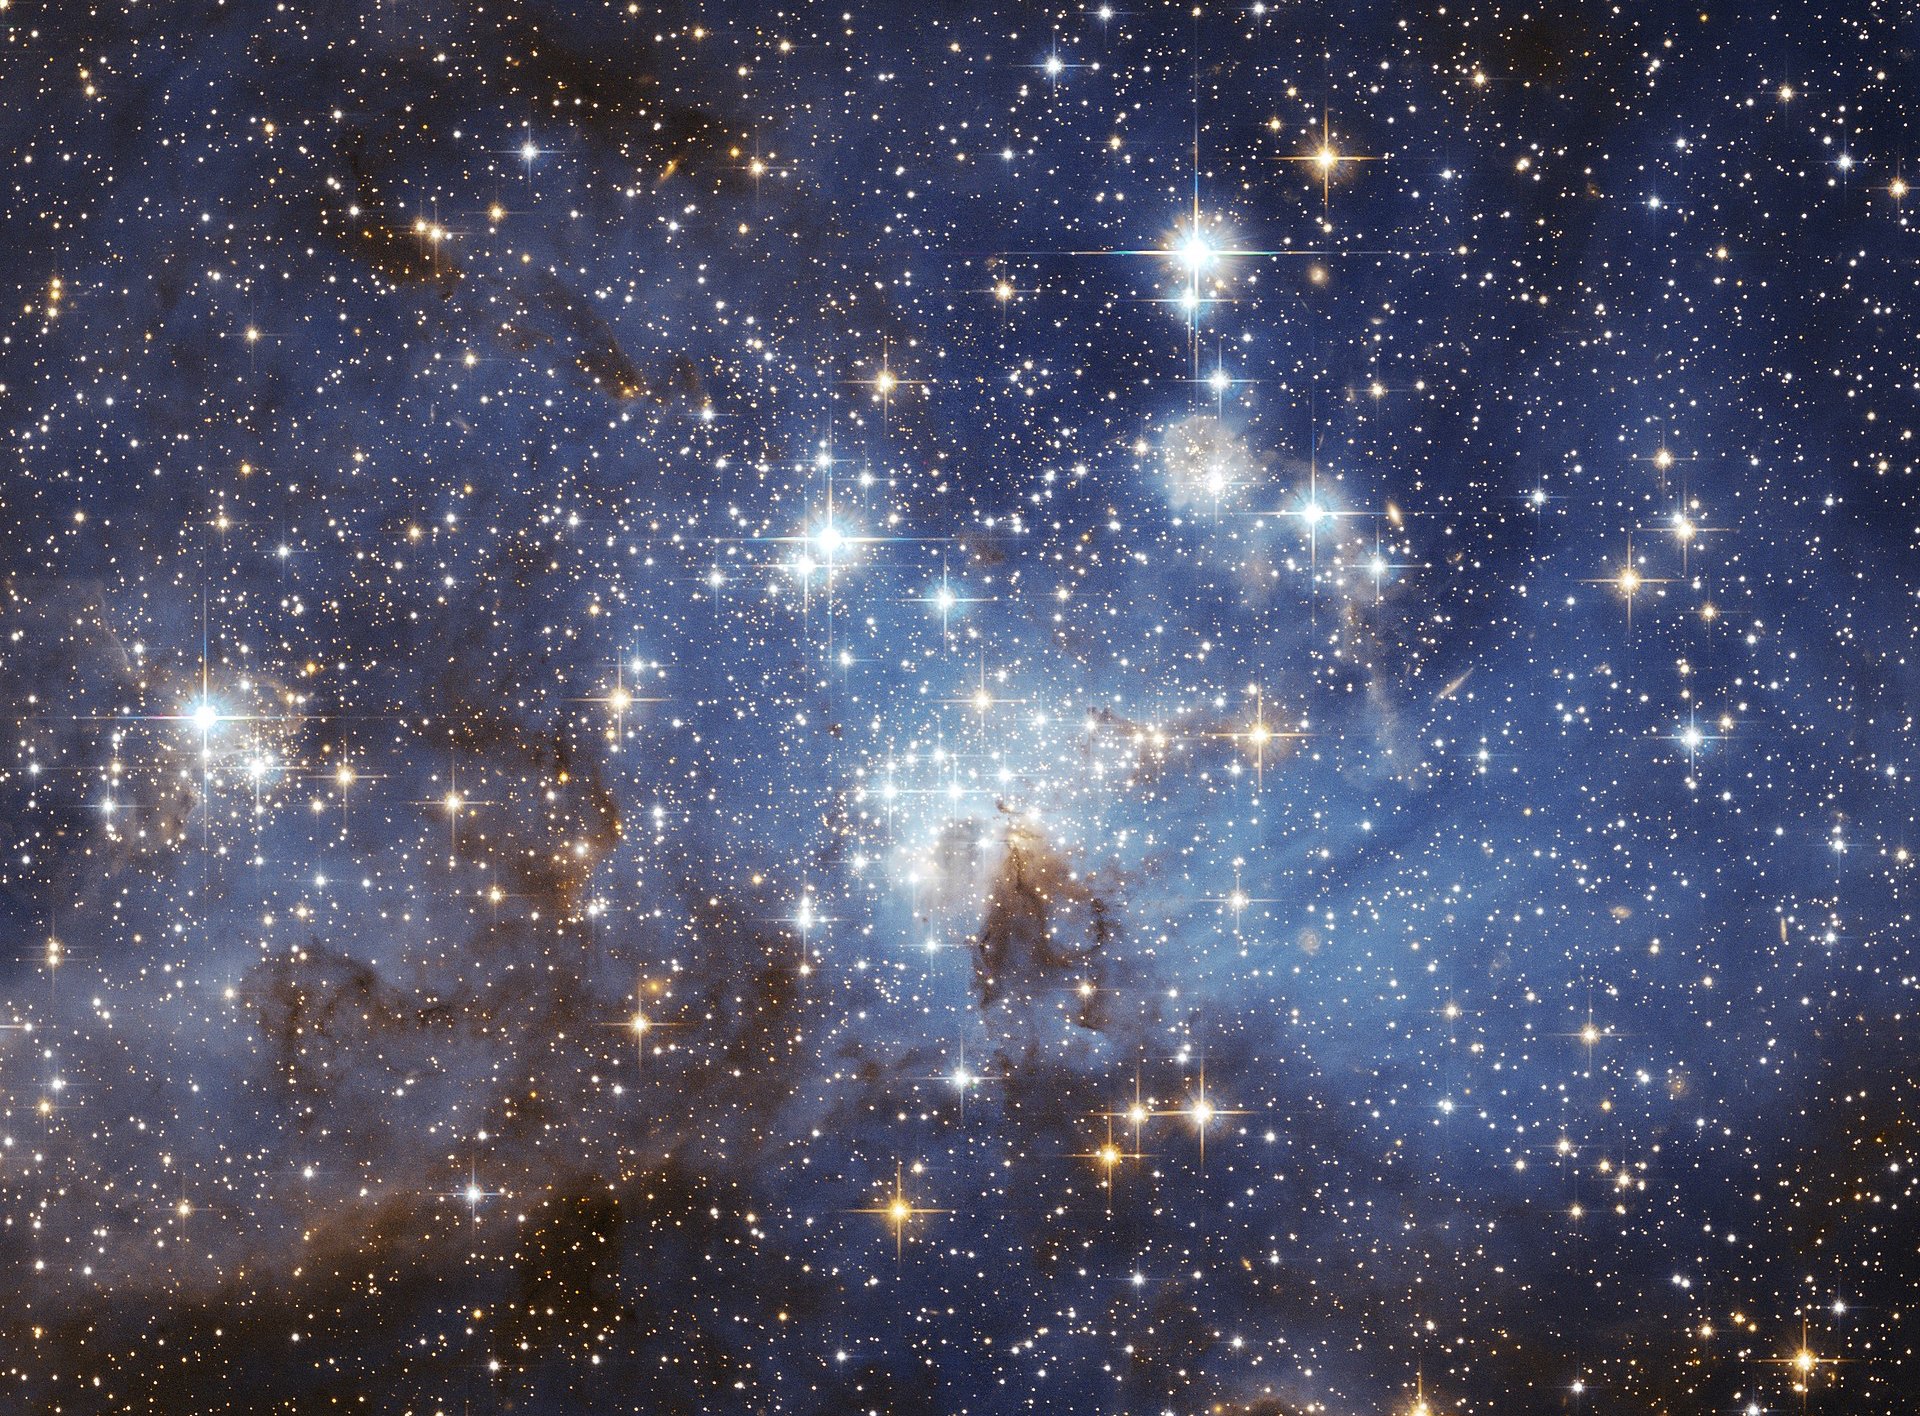 LH 95 stellar nursery in the Large Magellanic Cloud